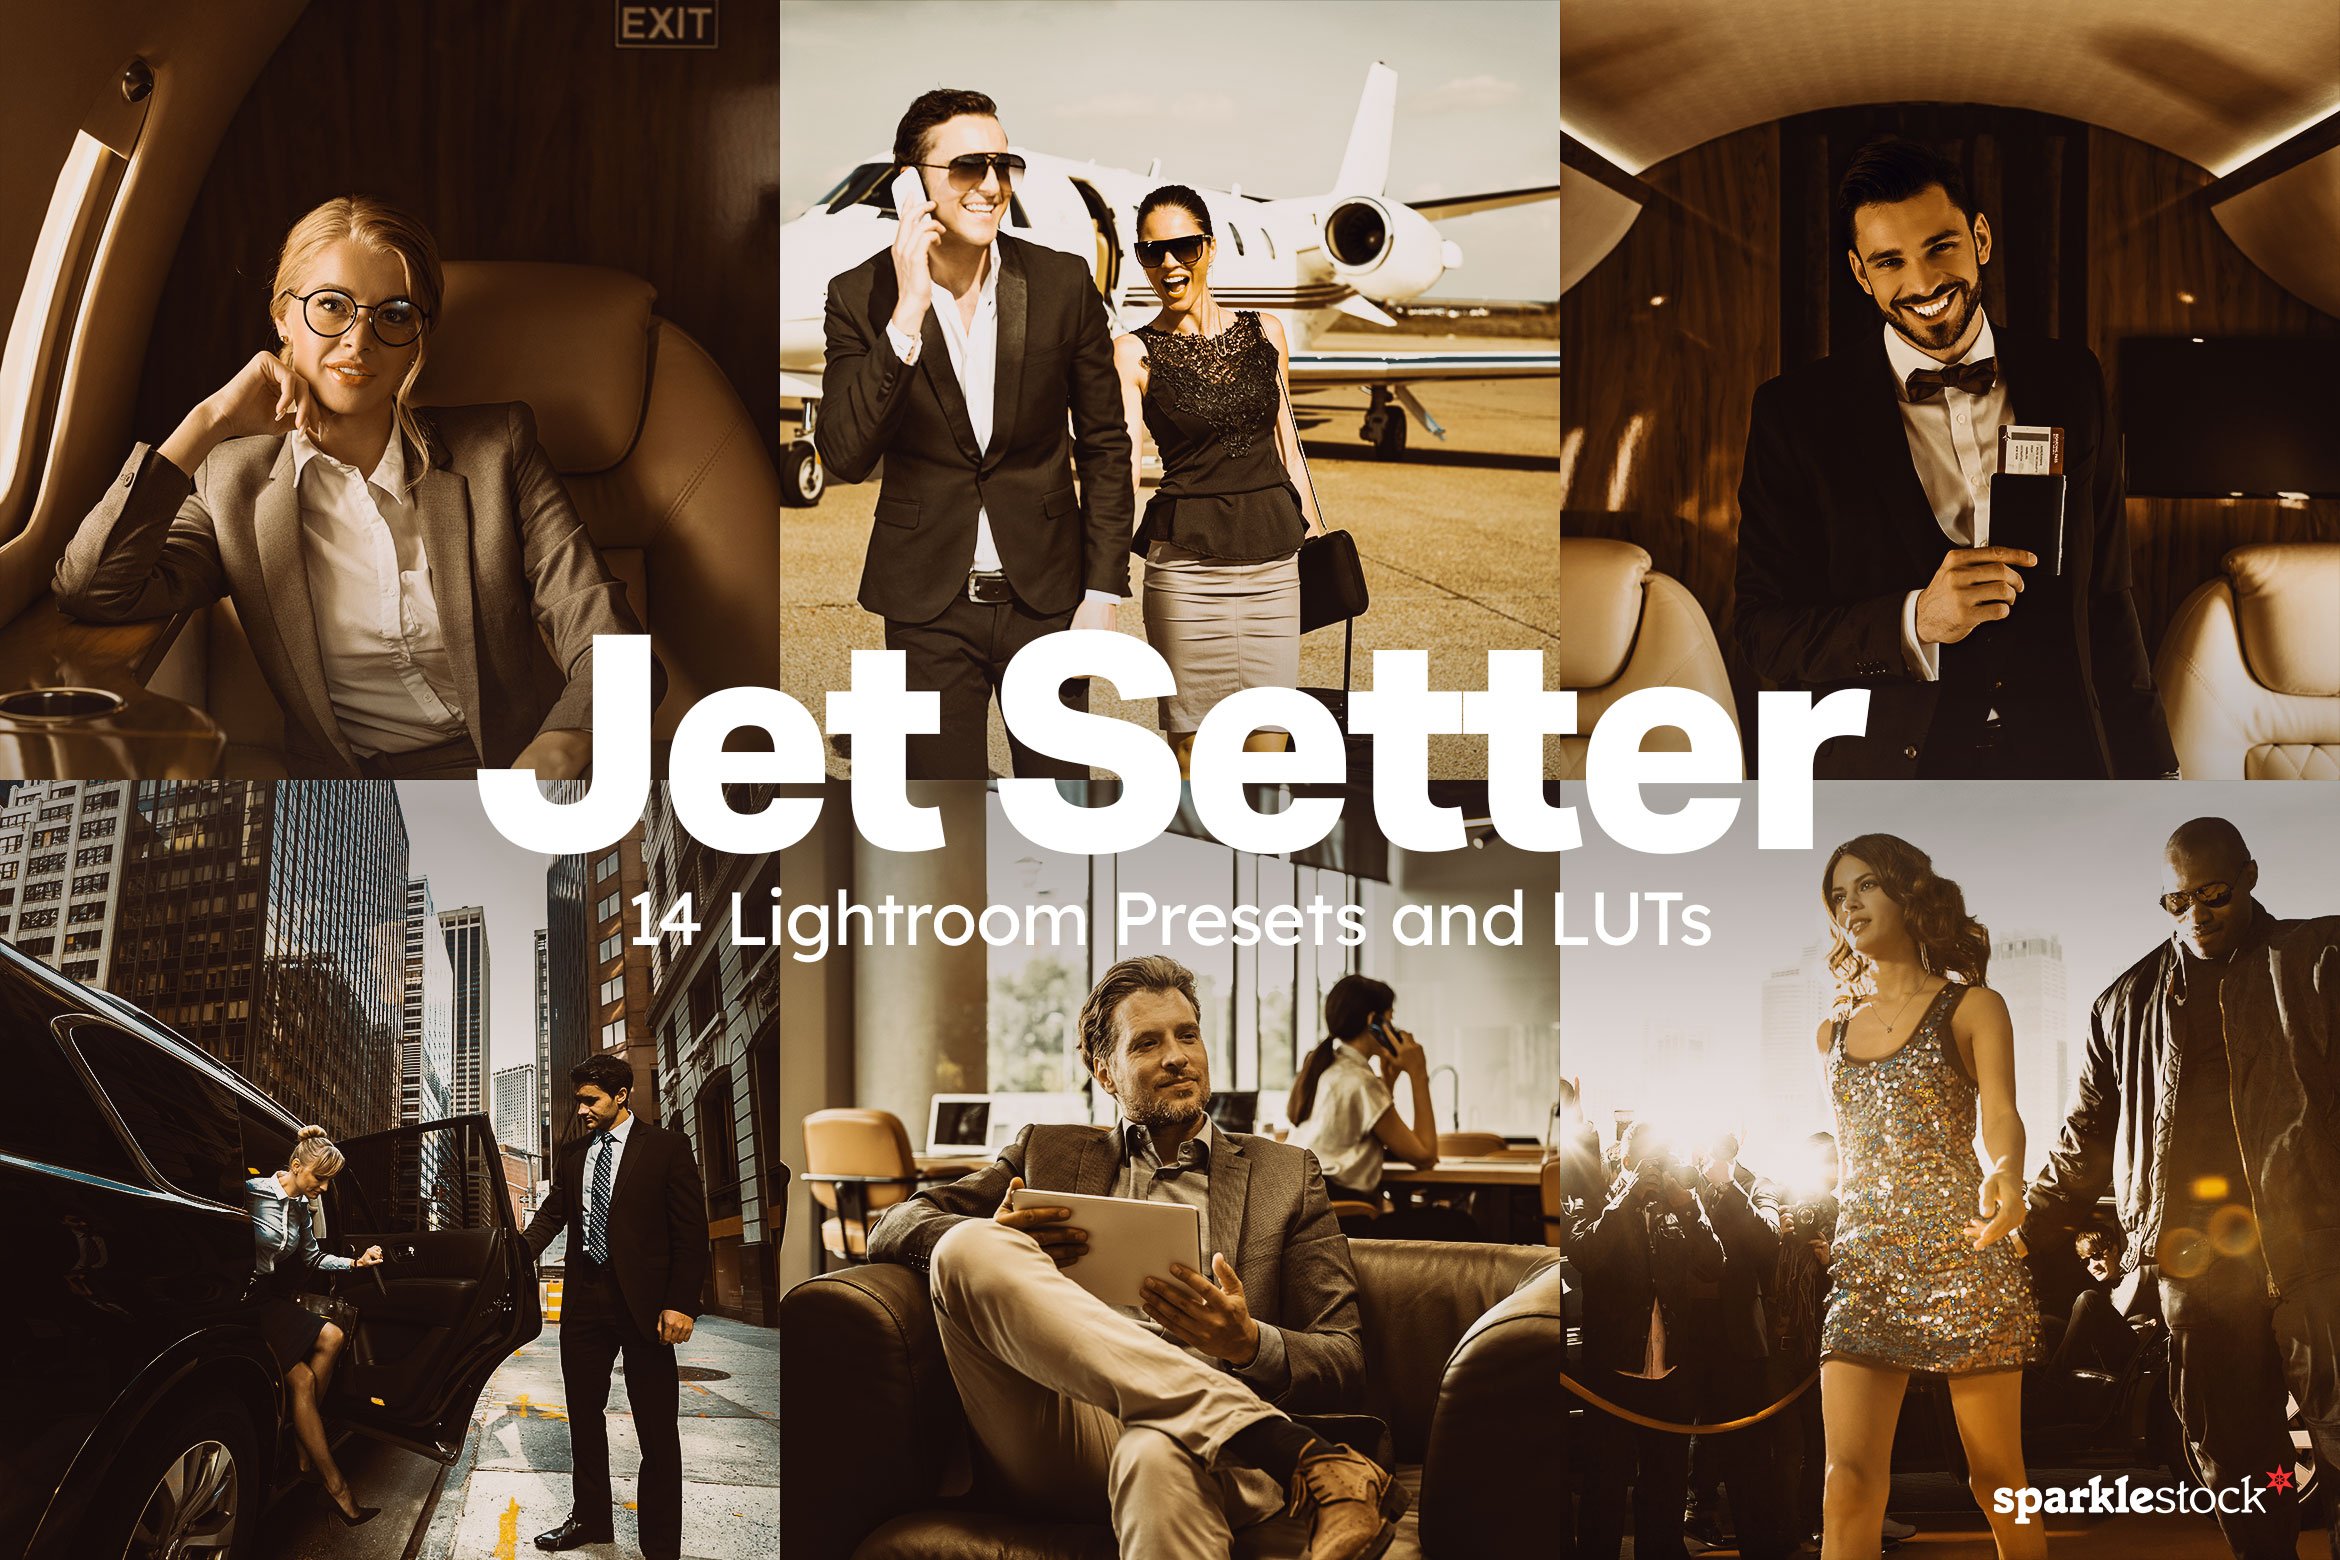 14 Jetsetter Lightroom Presets LUTscover image.